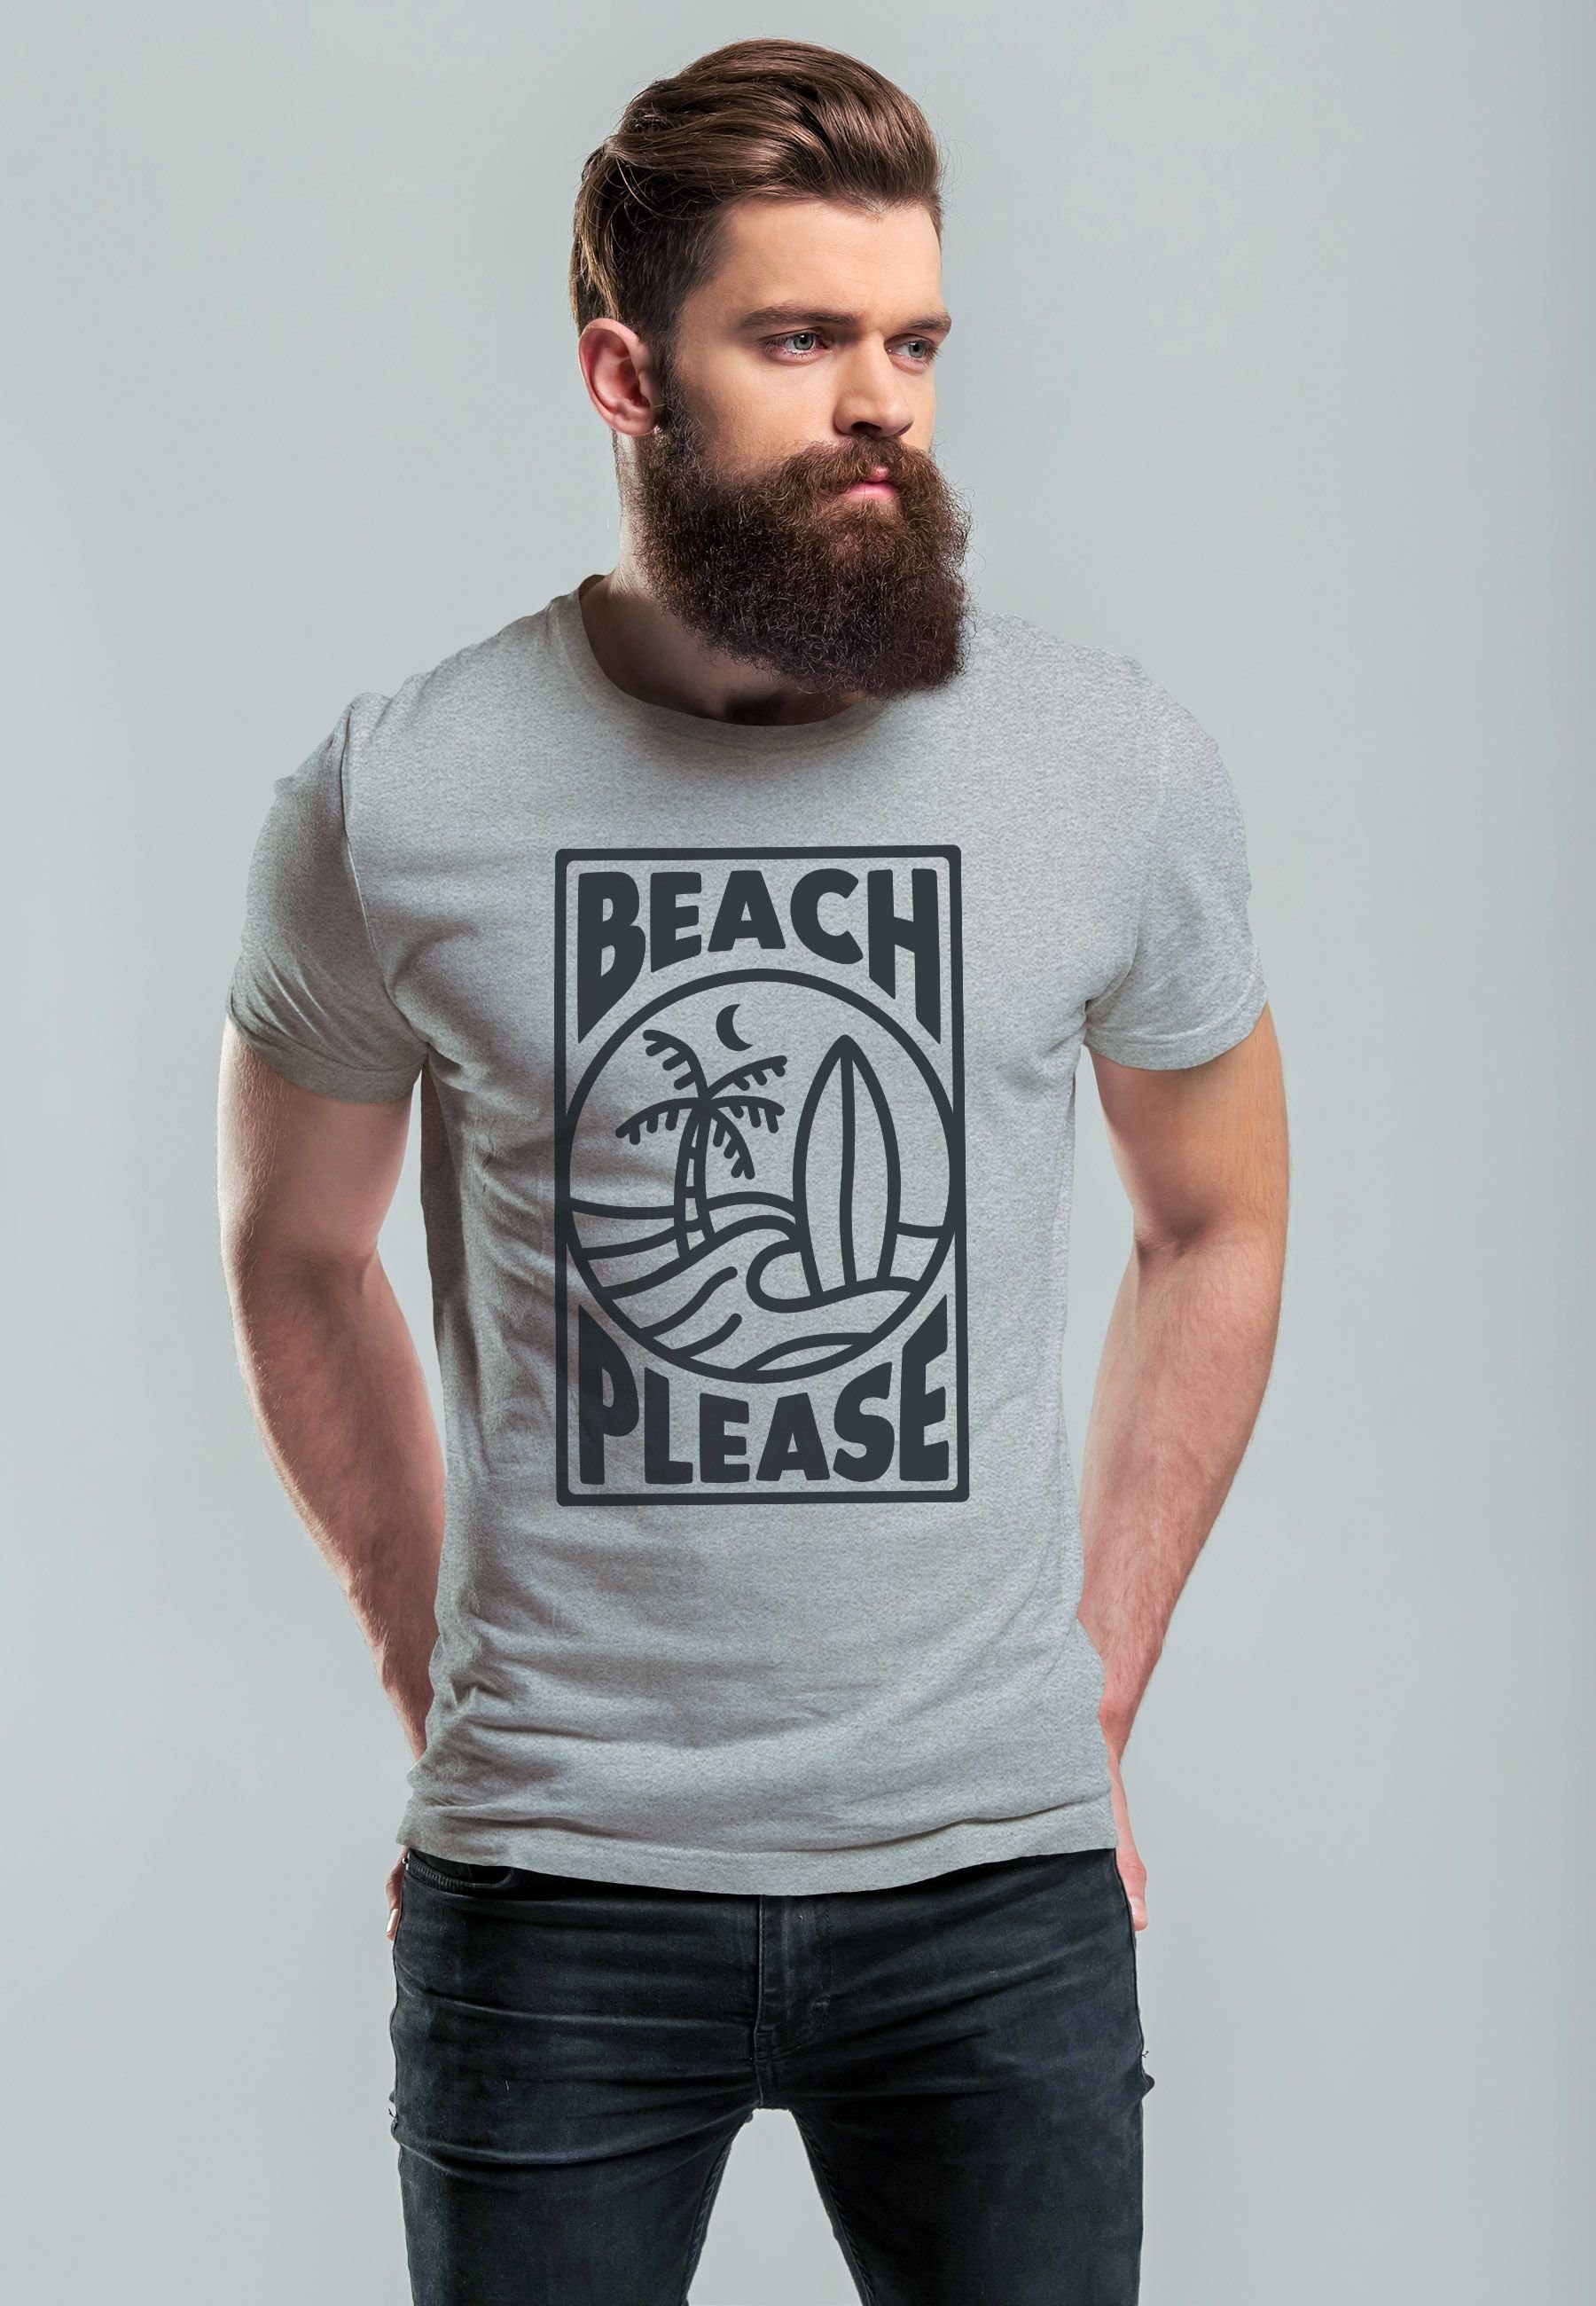 Print Sommer Surfing grau Print-Shirt Surfboard Beach Please Print T-Shirt Welle Neverless mit Wave Herren